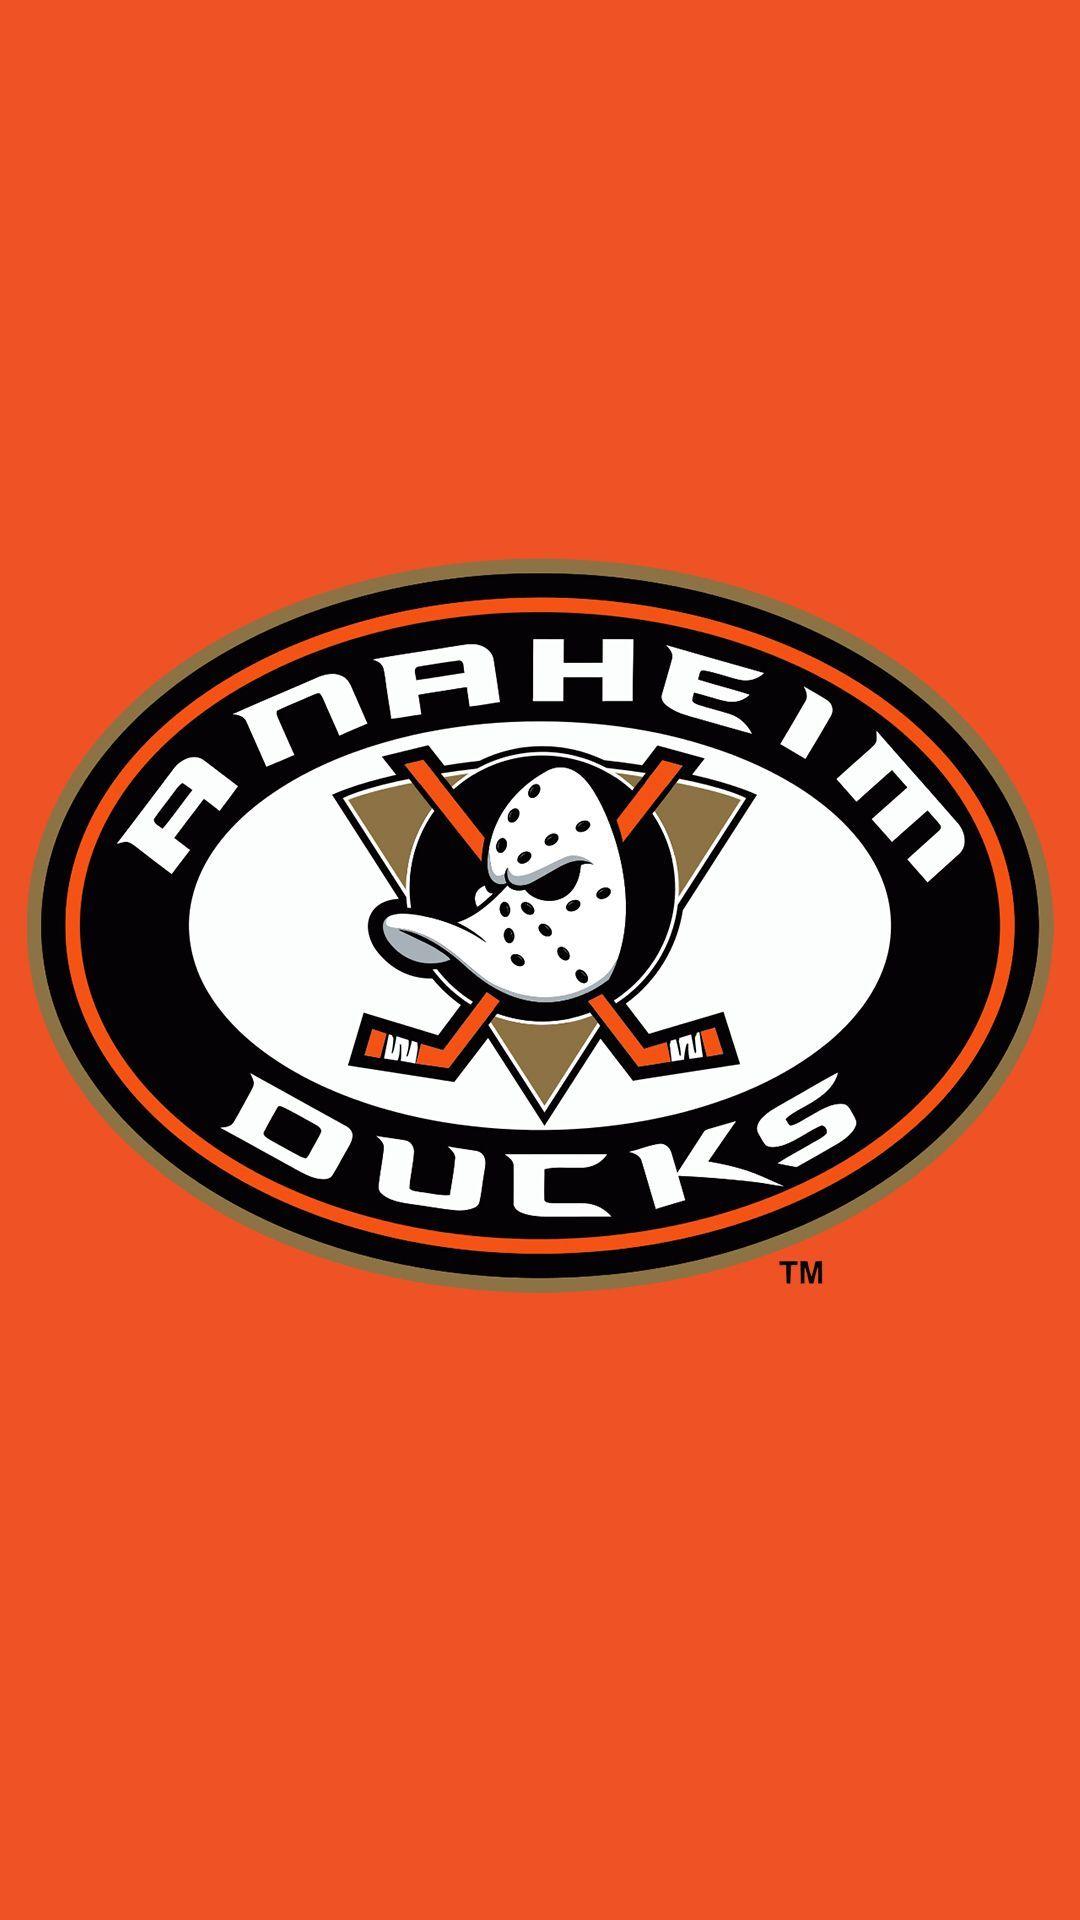 Anaheim Ducks Logo - Anaheim Ducks iPhone 6 plus wallpaper created by me. iPhone 6 plus